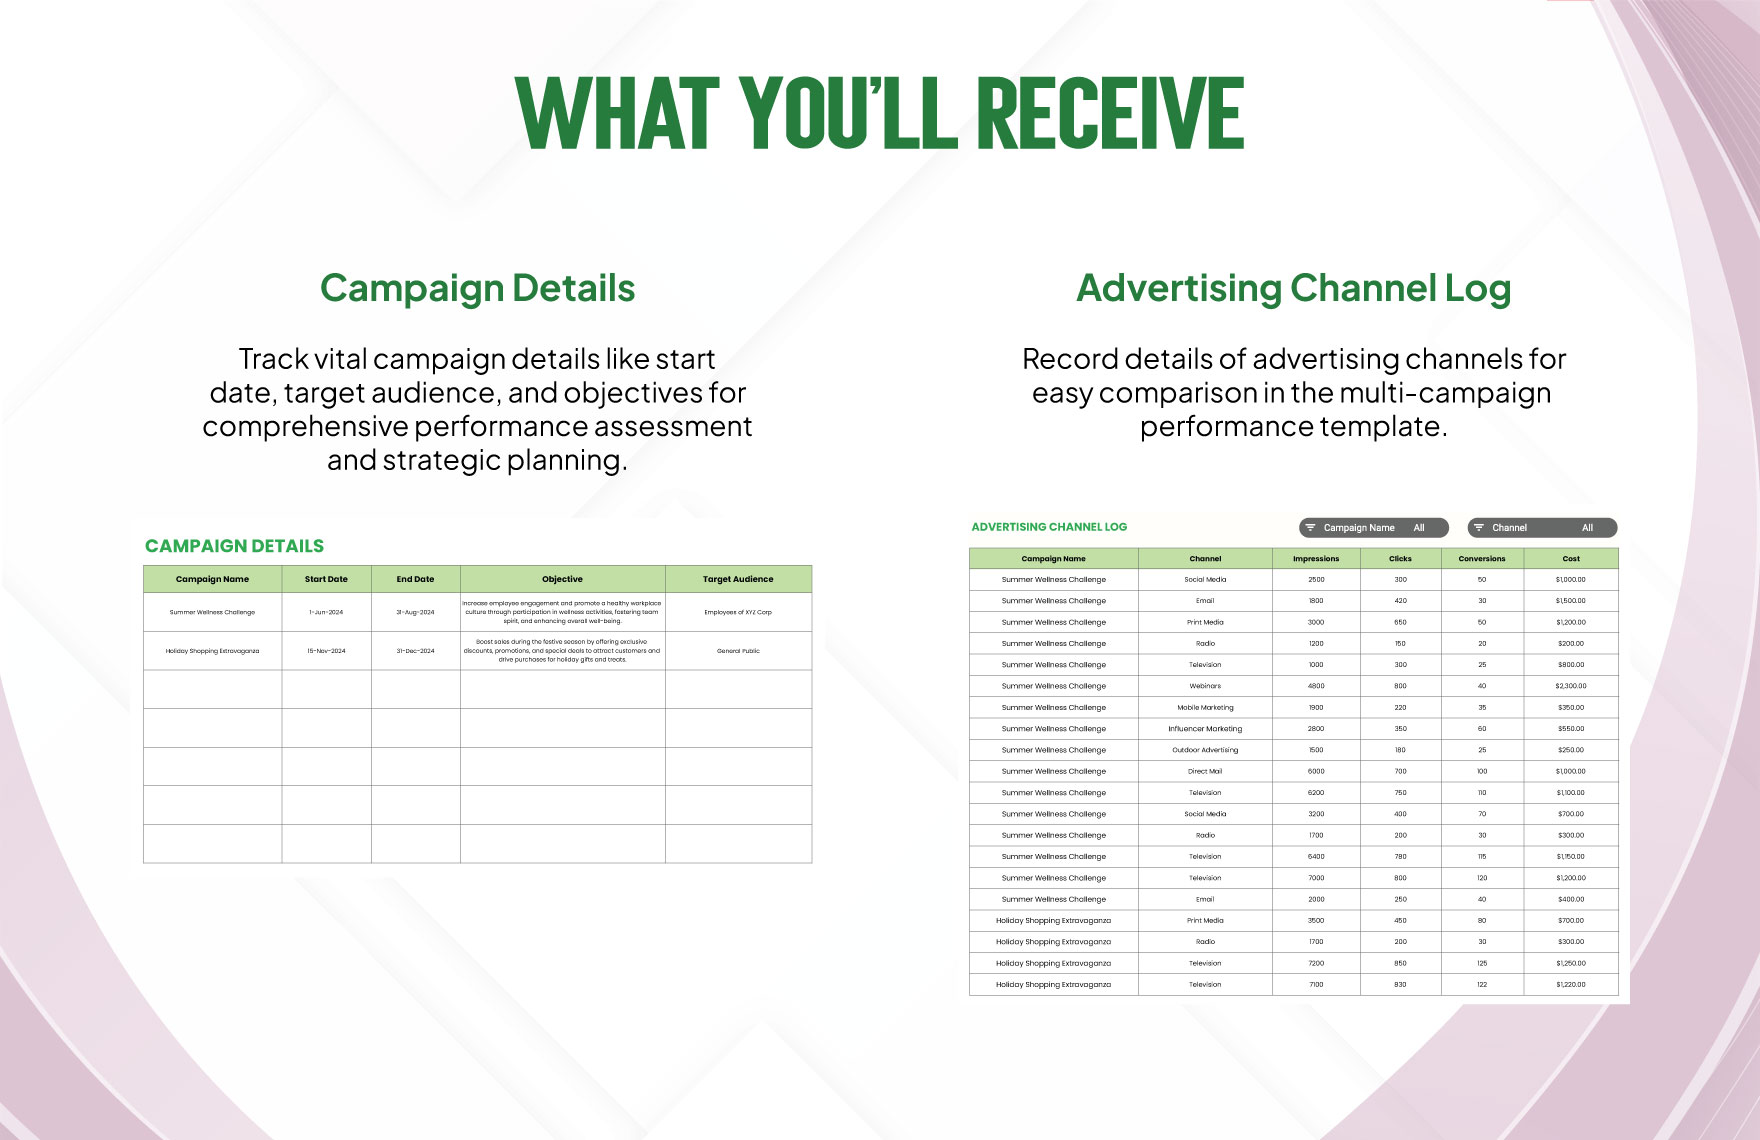 Advertising Multi-Campaign Performance Comparison Template